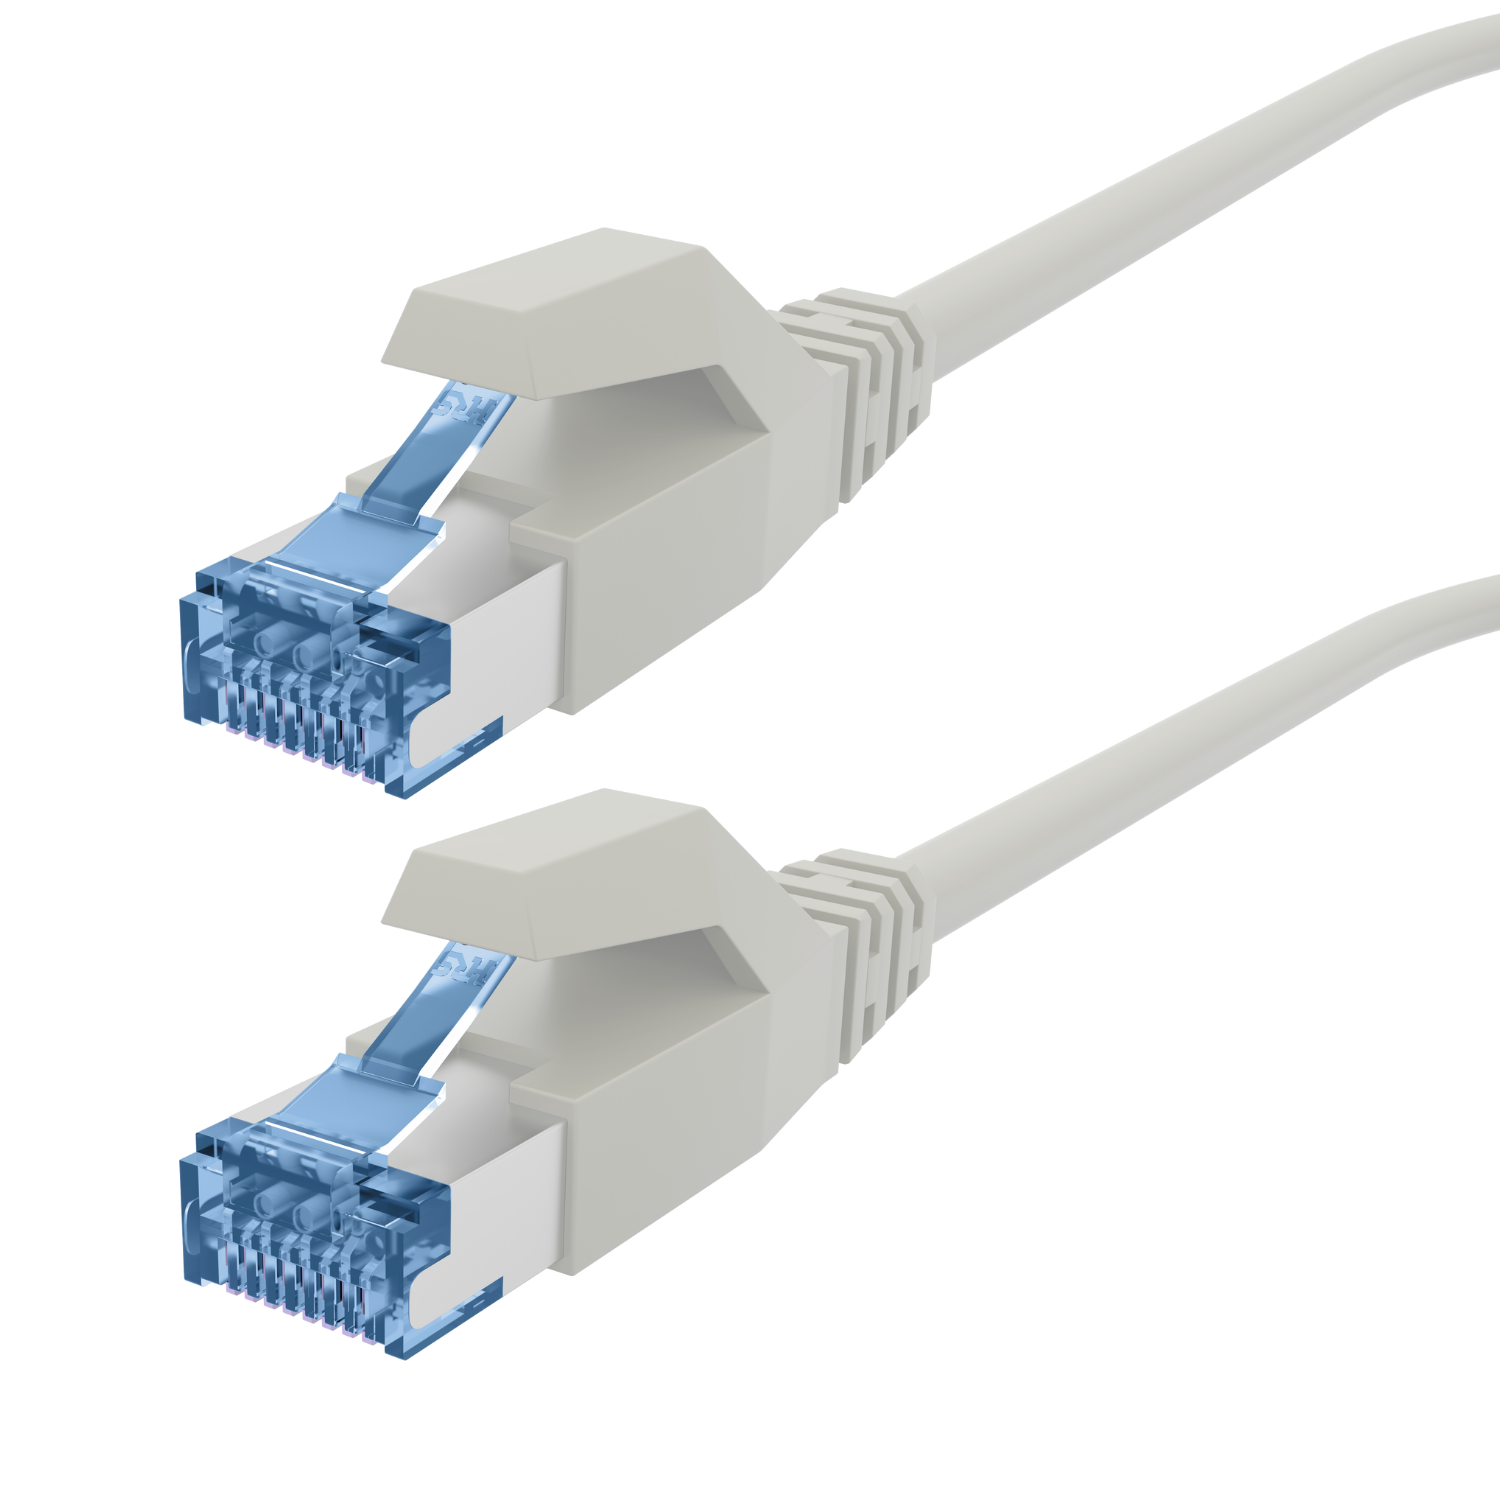 12m Gigabit, Ethernetkabel Universal 12,0 AIXONTEC RJ45 10 m Lankabel Netzwerkkabel,